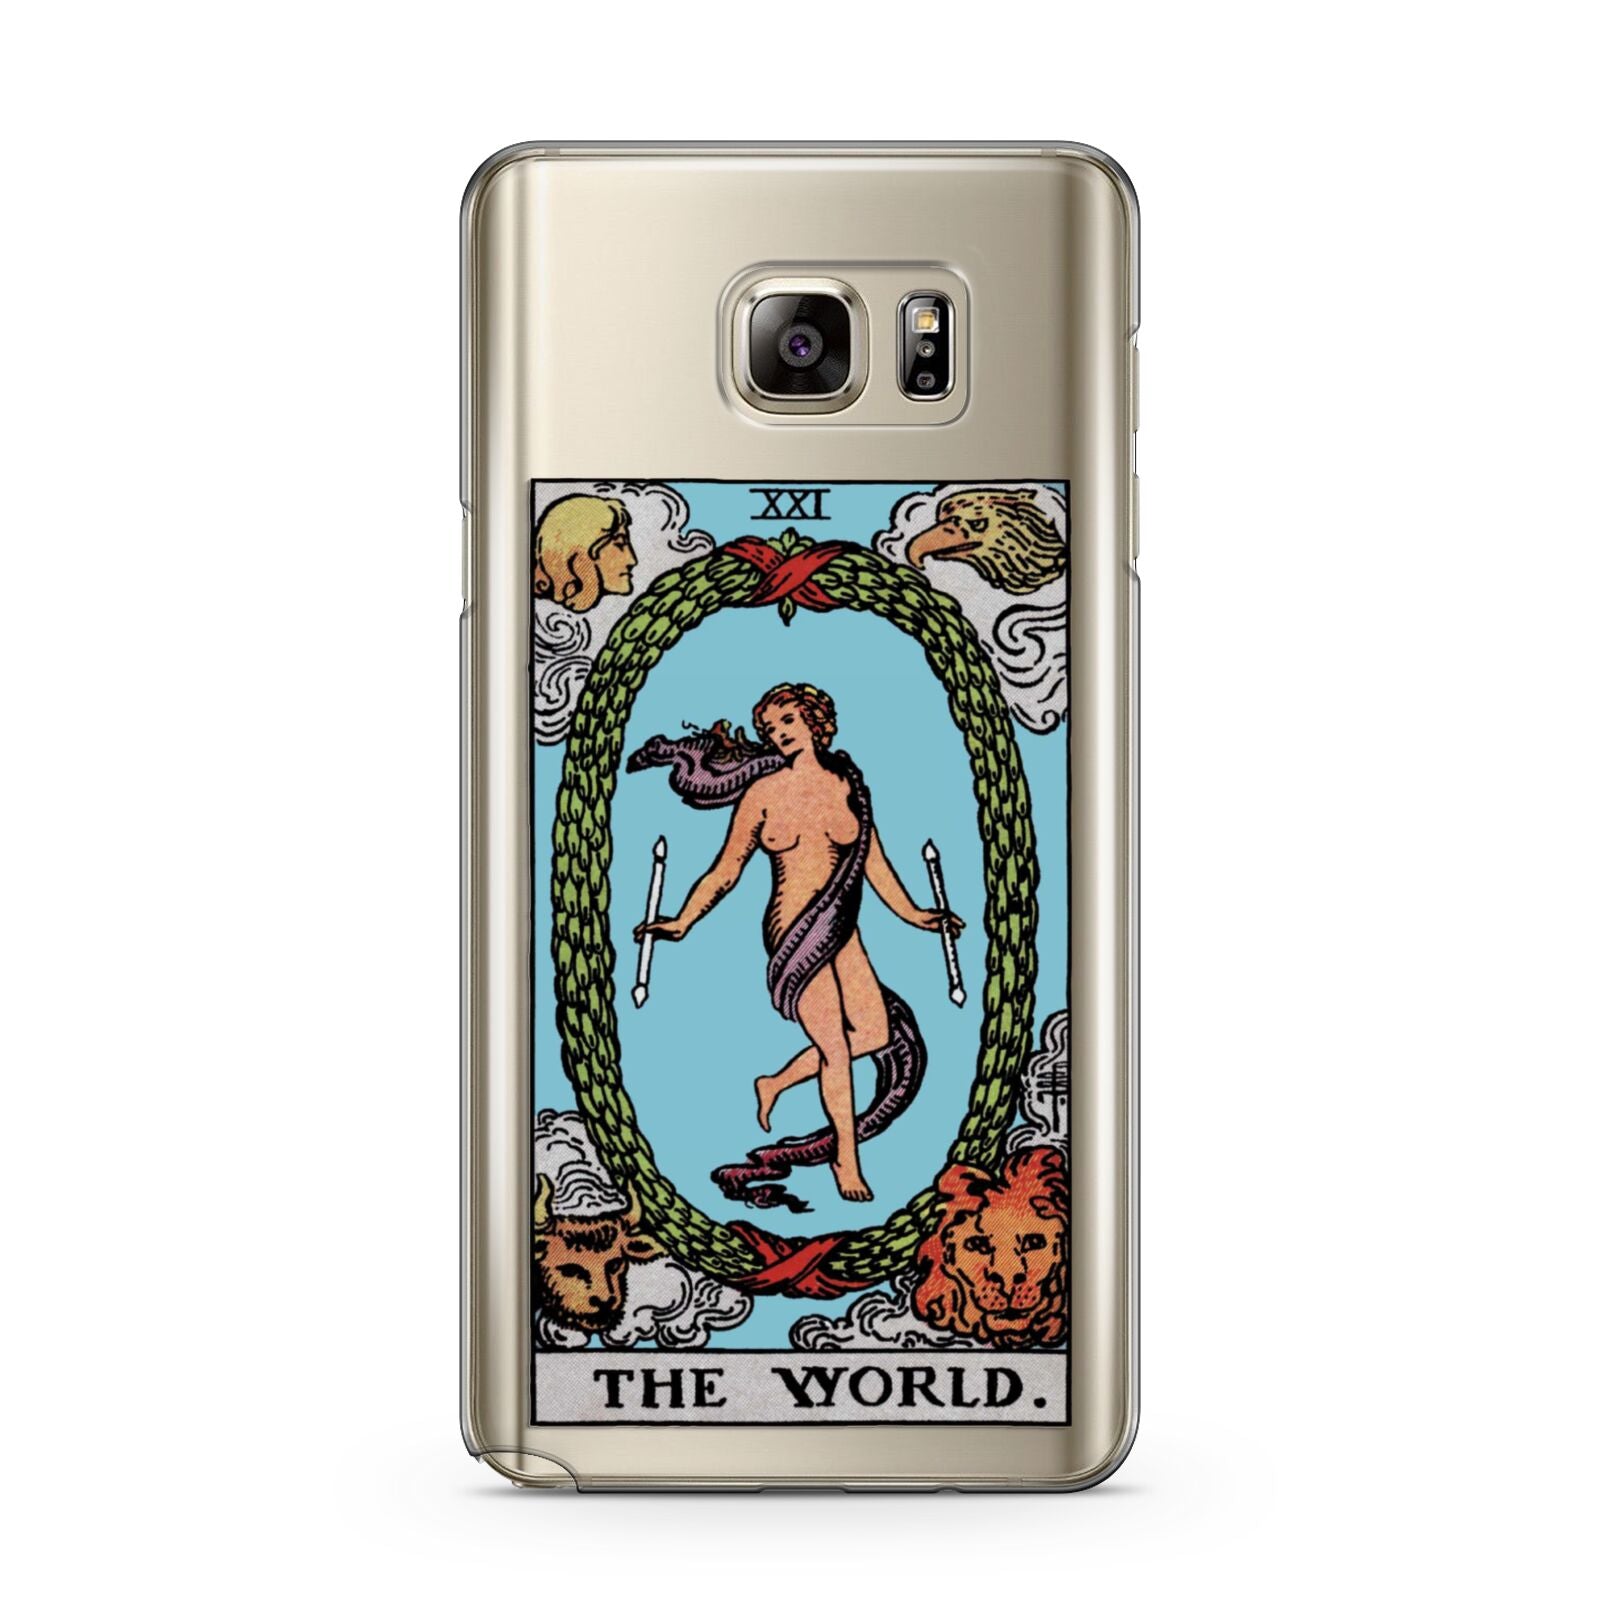 The World Tarot Card Samsung Galaxy Note 5 Case